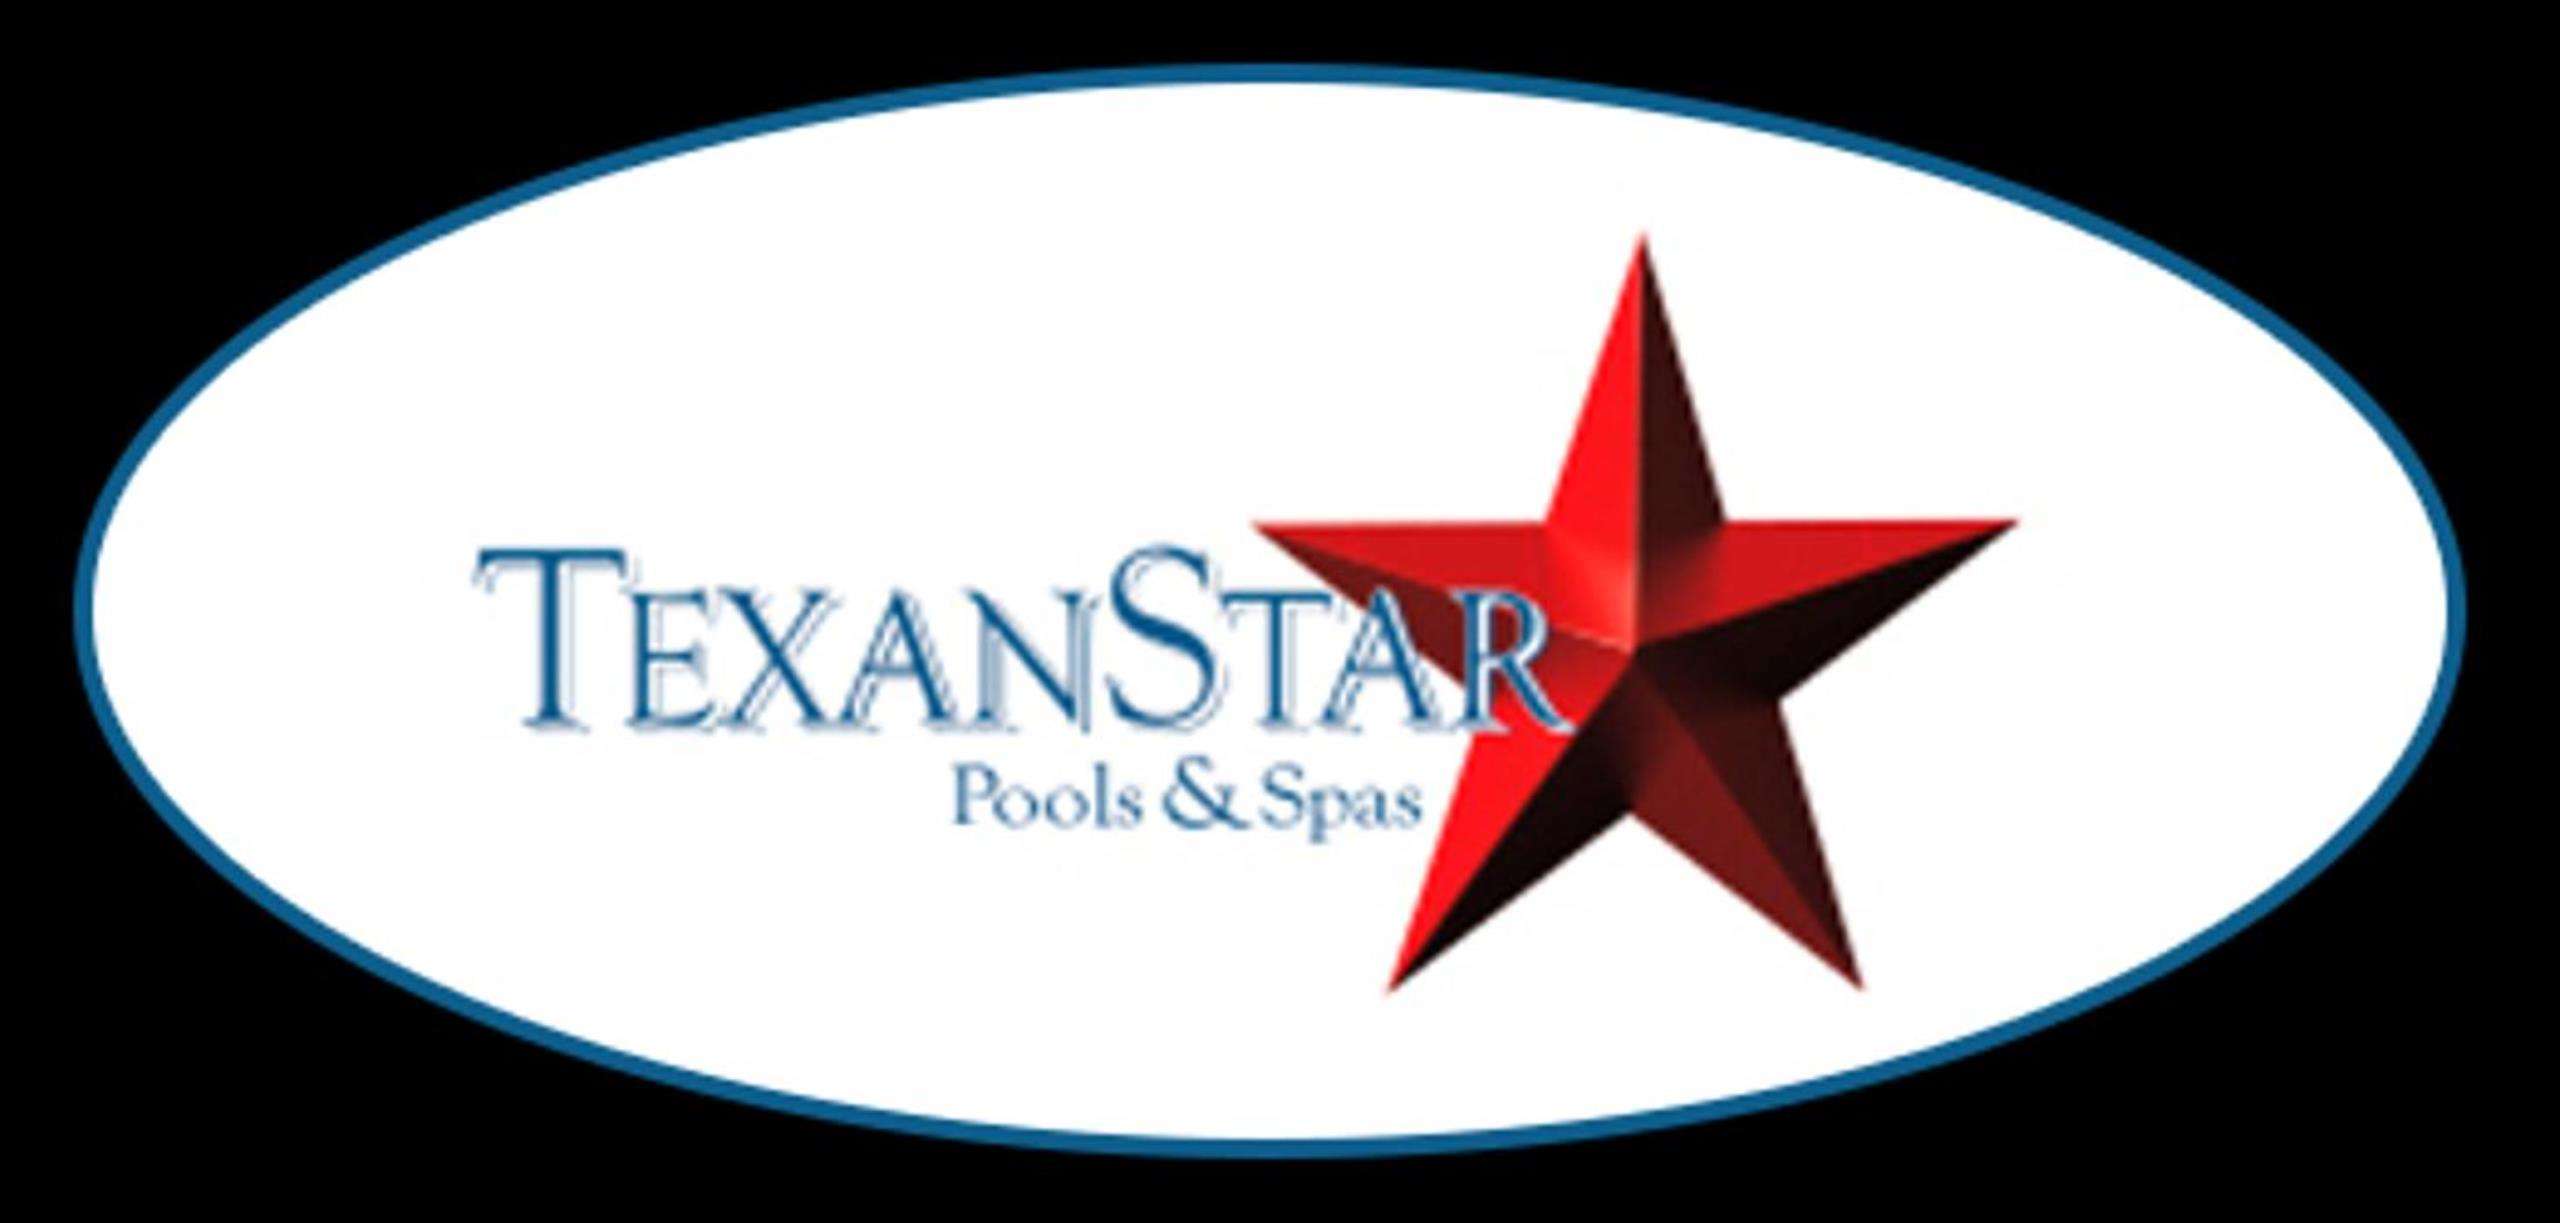 Texan Star Pools and Spas Logo